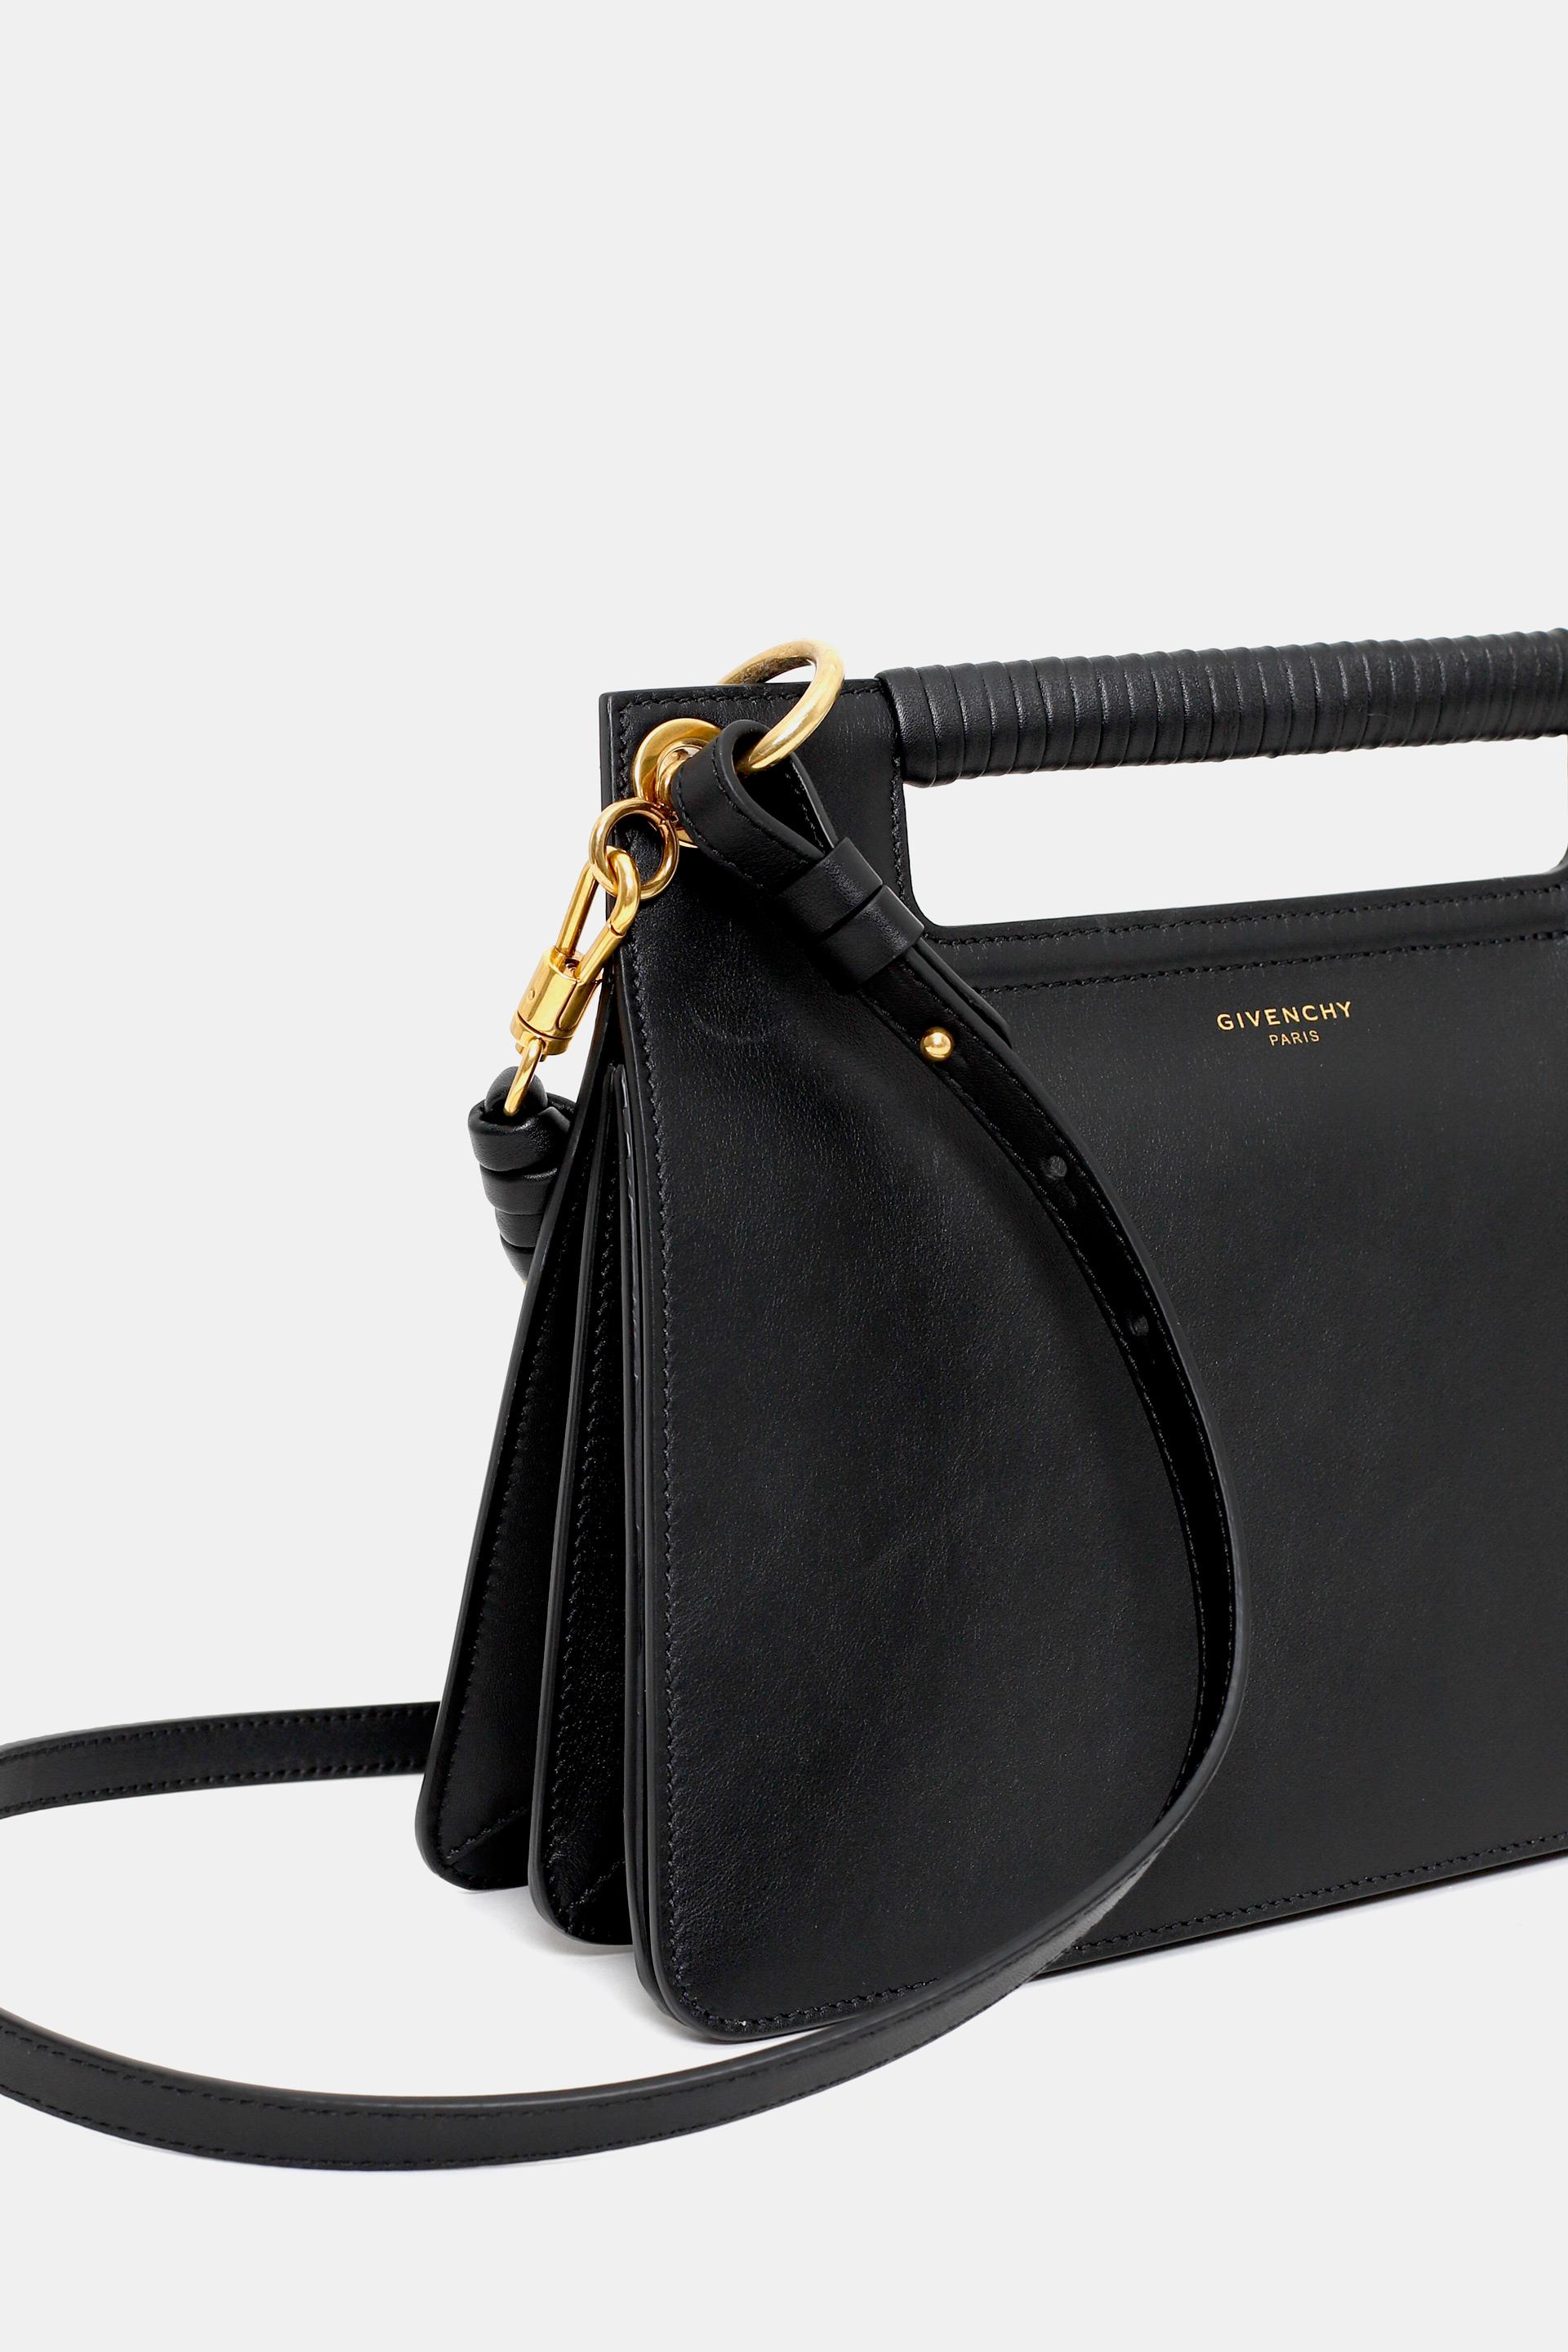 Givenchy Medium Whip Bag in Black - Lyst